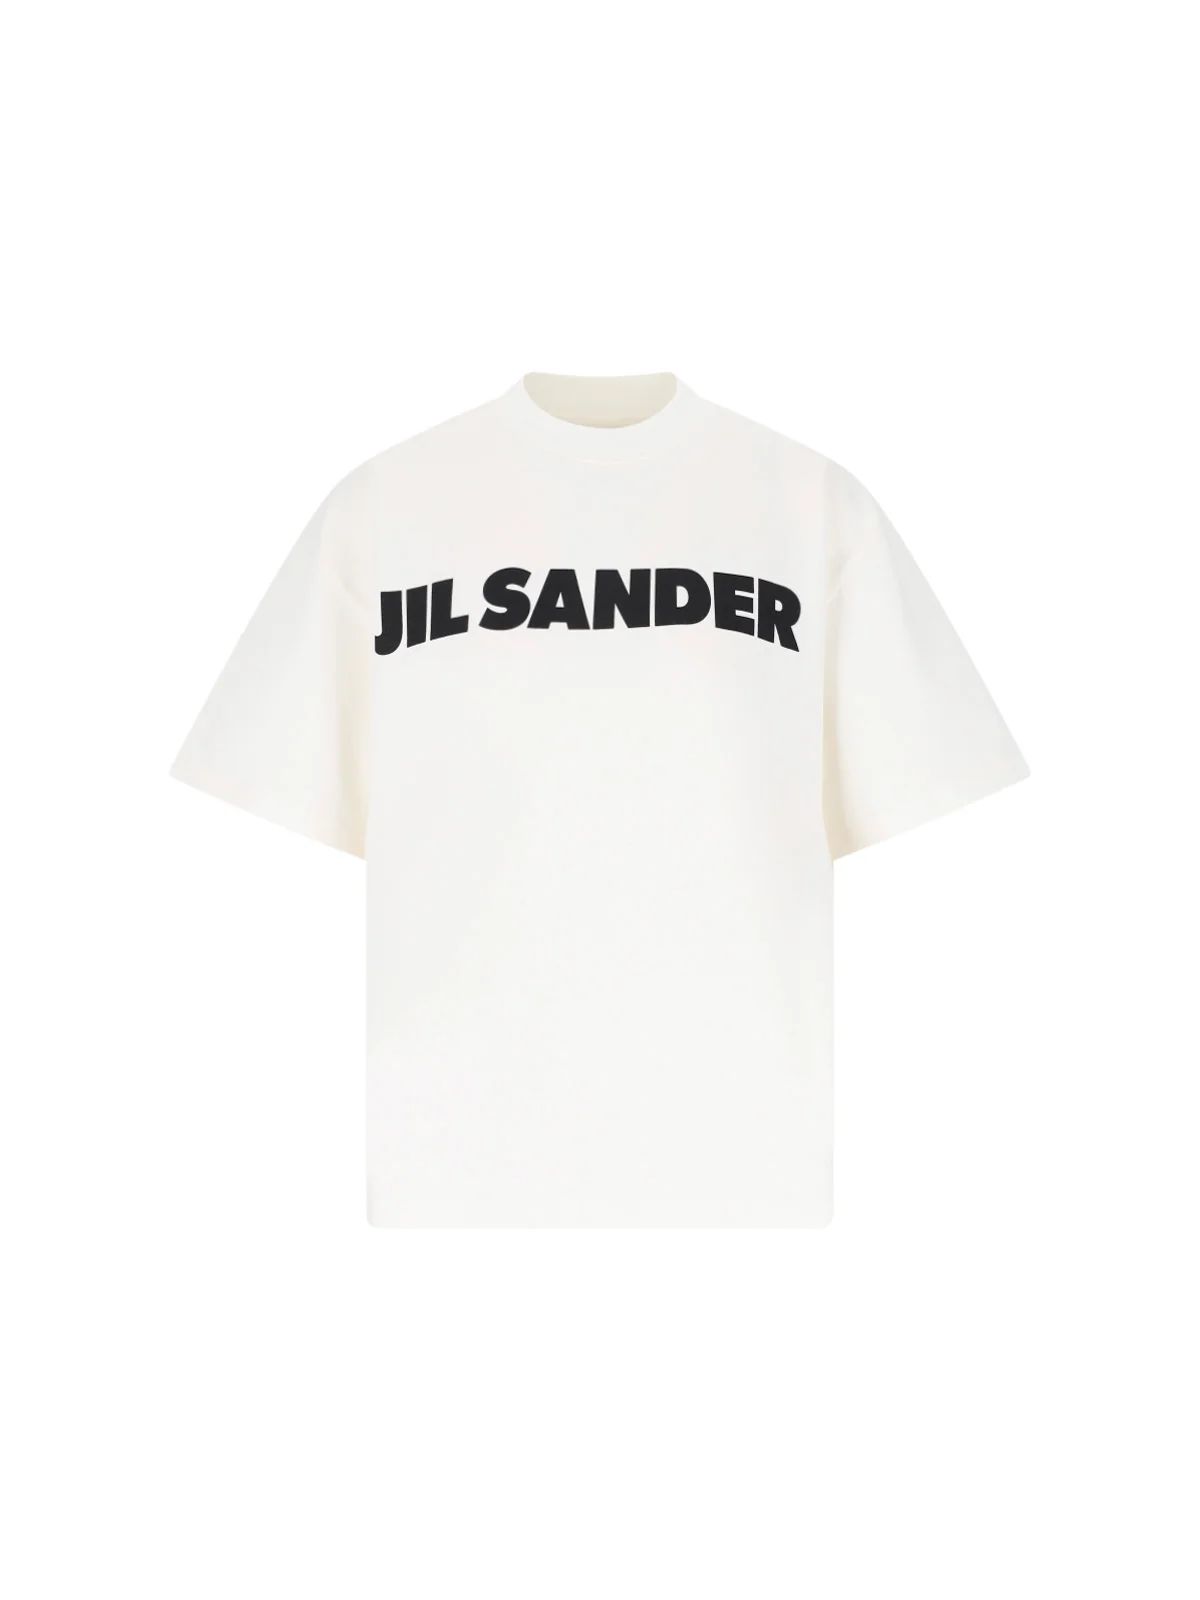 Jil Sander Logo Printed Crewneck T-Shirt | Cettire Global